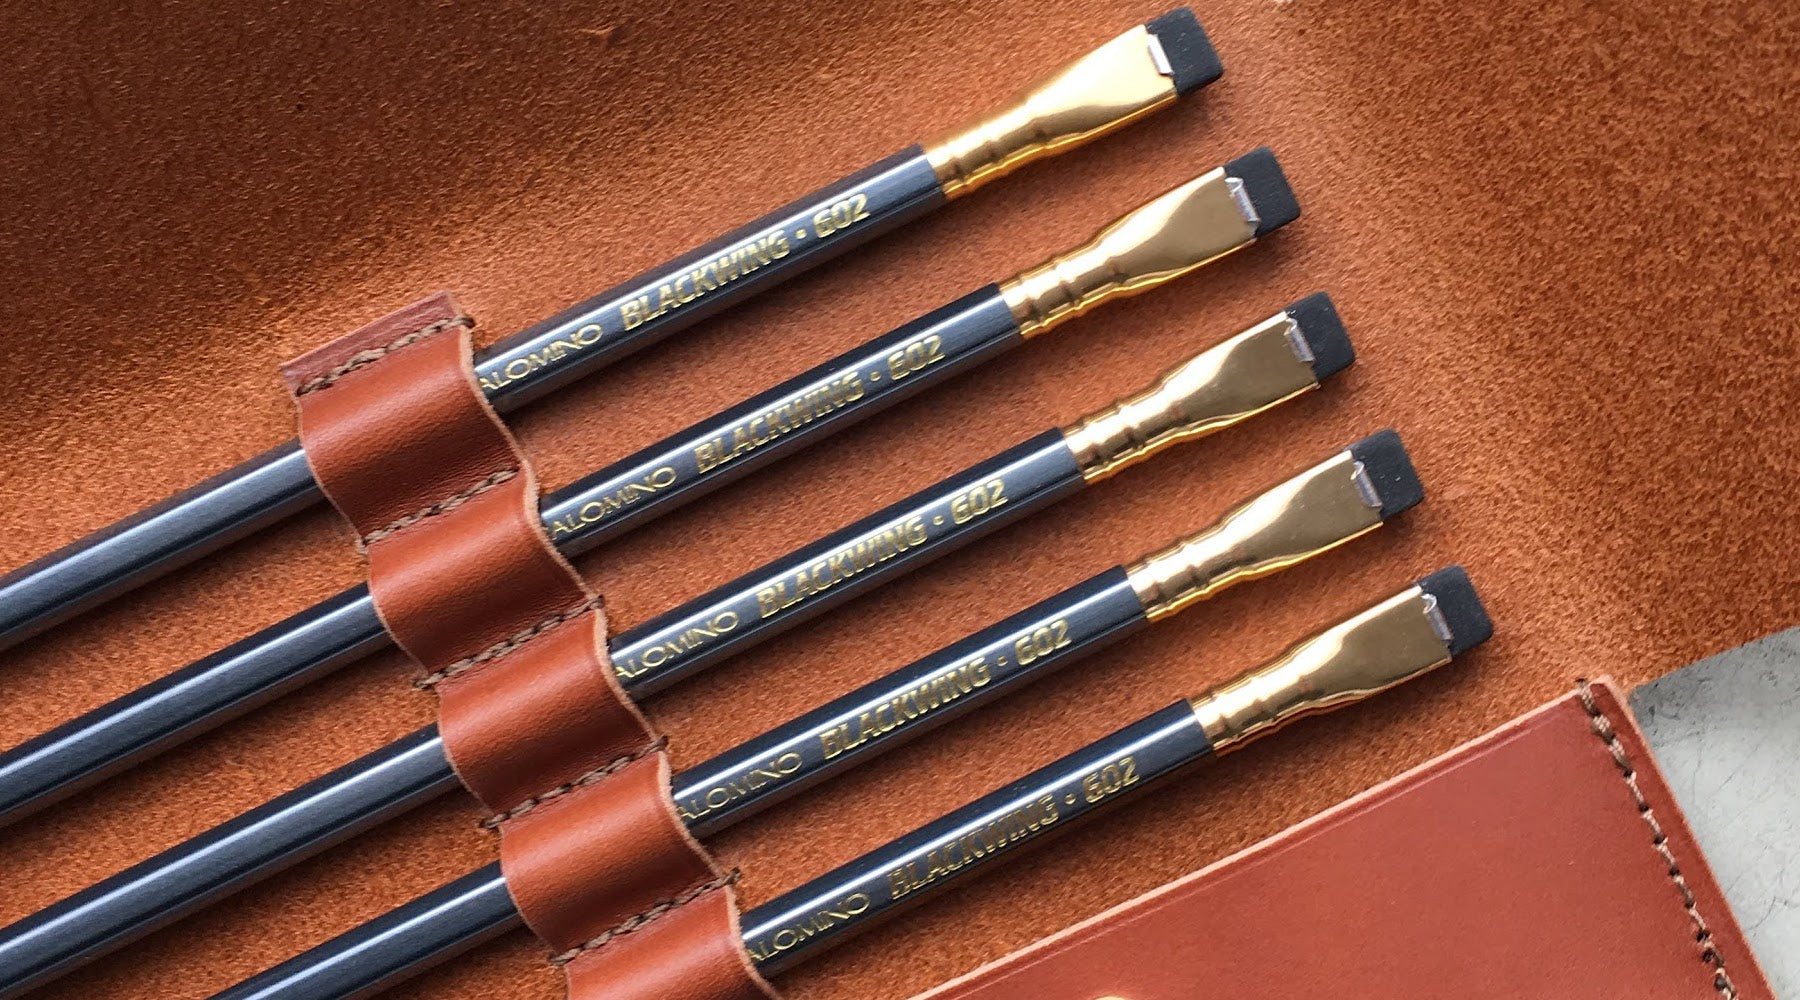 BLACKWING Palomino Eras blue pencils - NOMADO Store